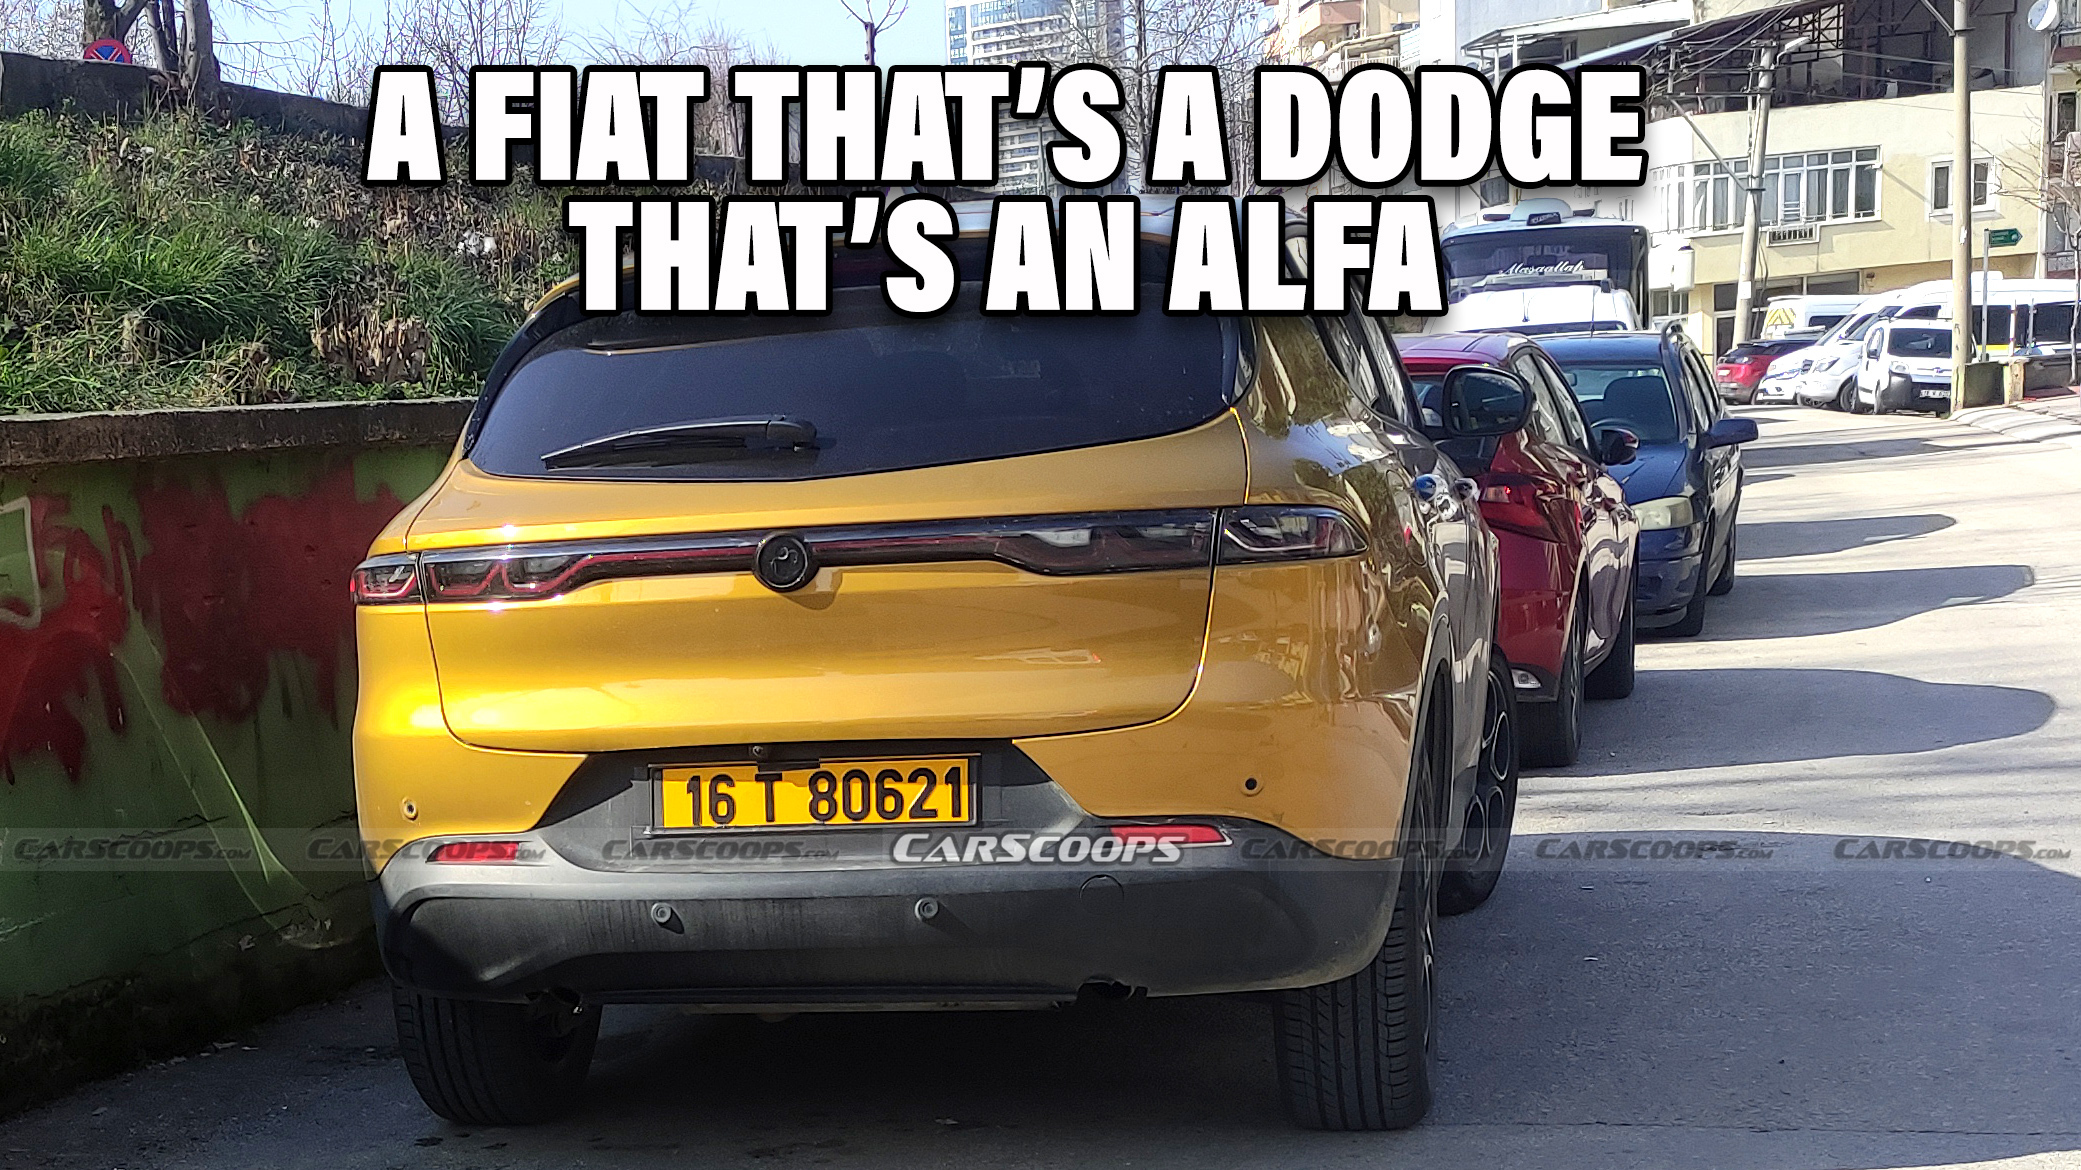 Fiat's new Dodge is a sales success